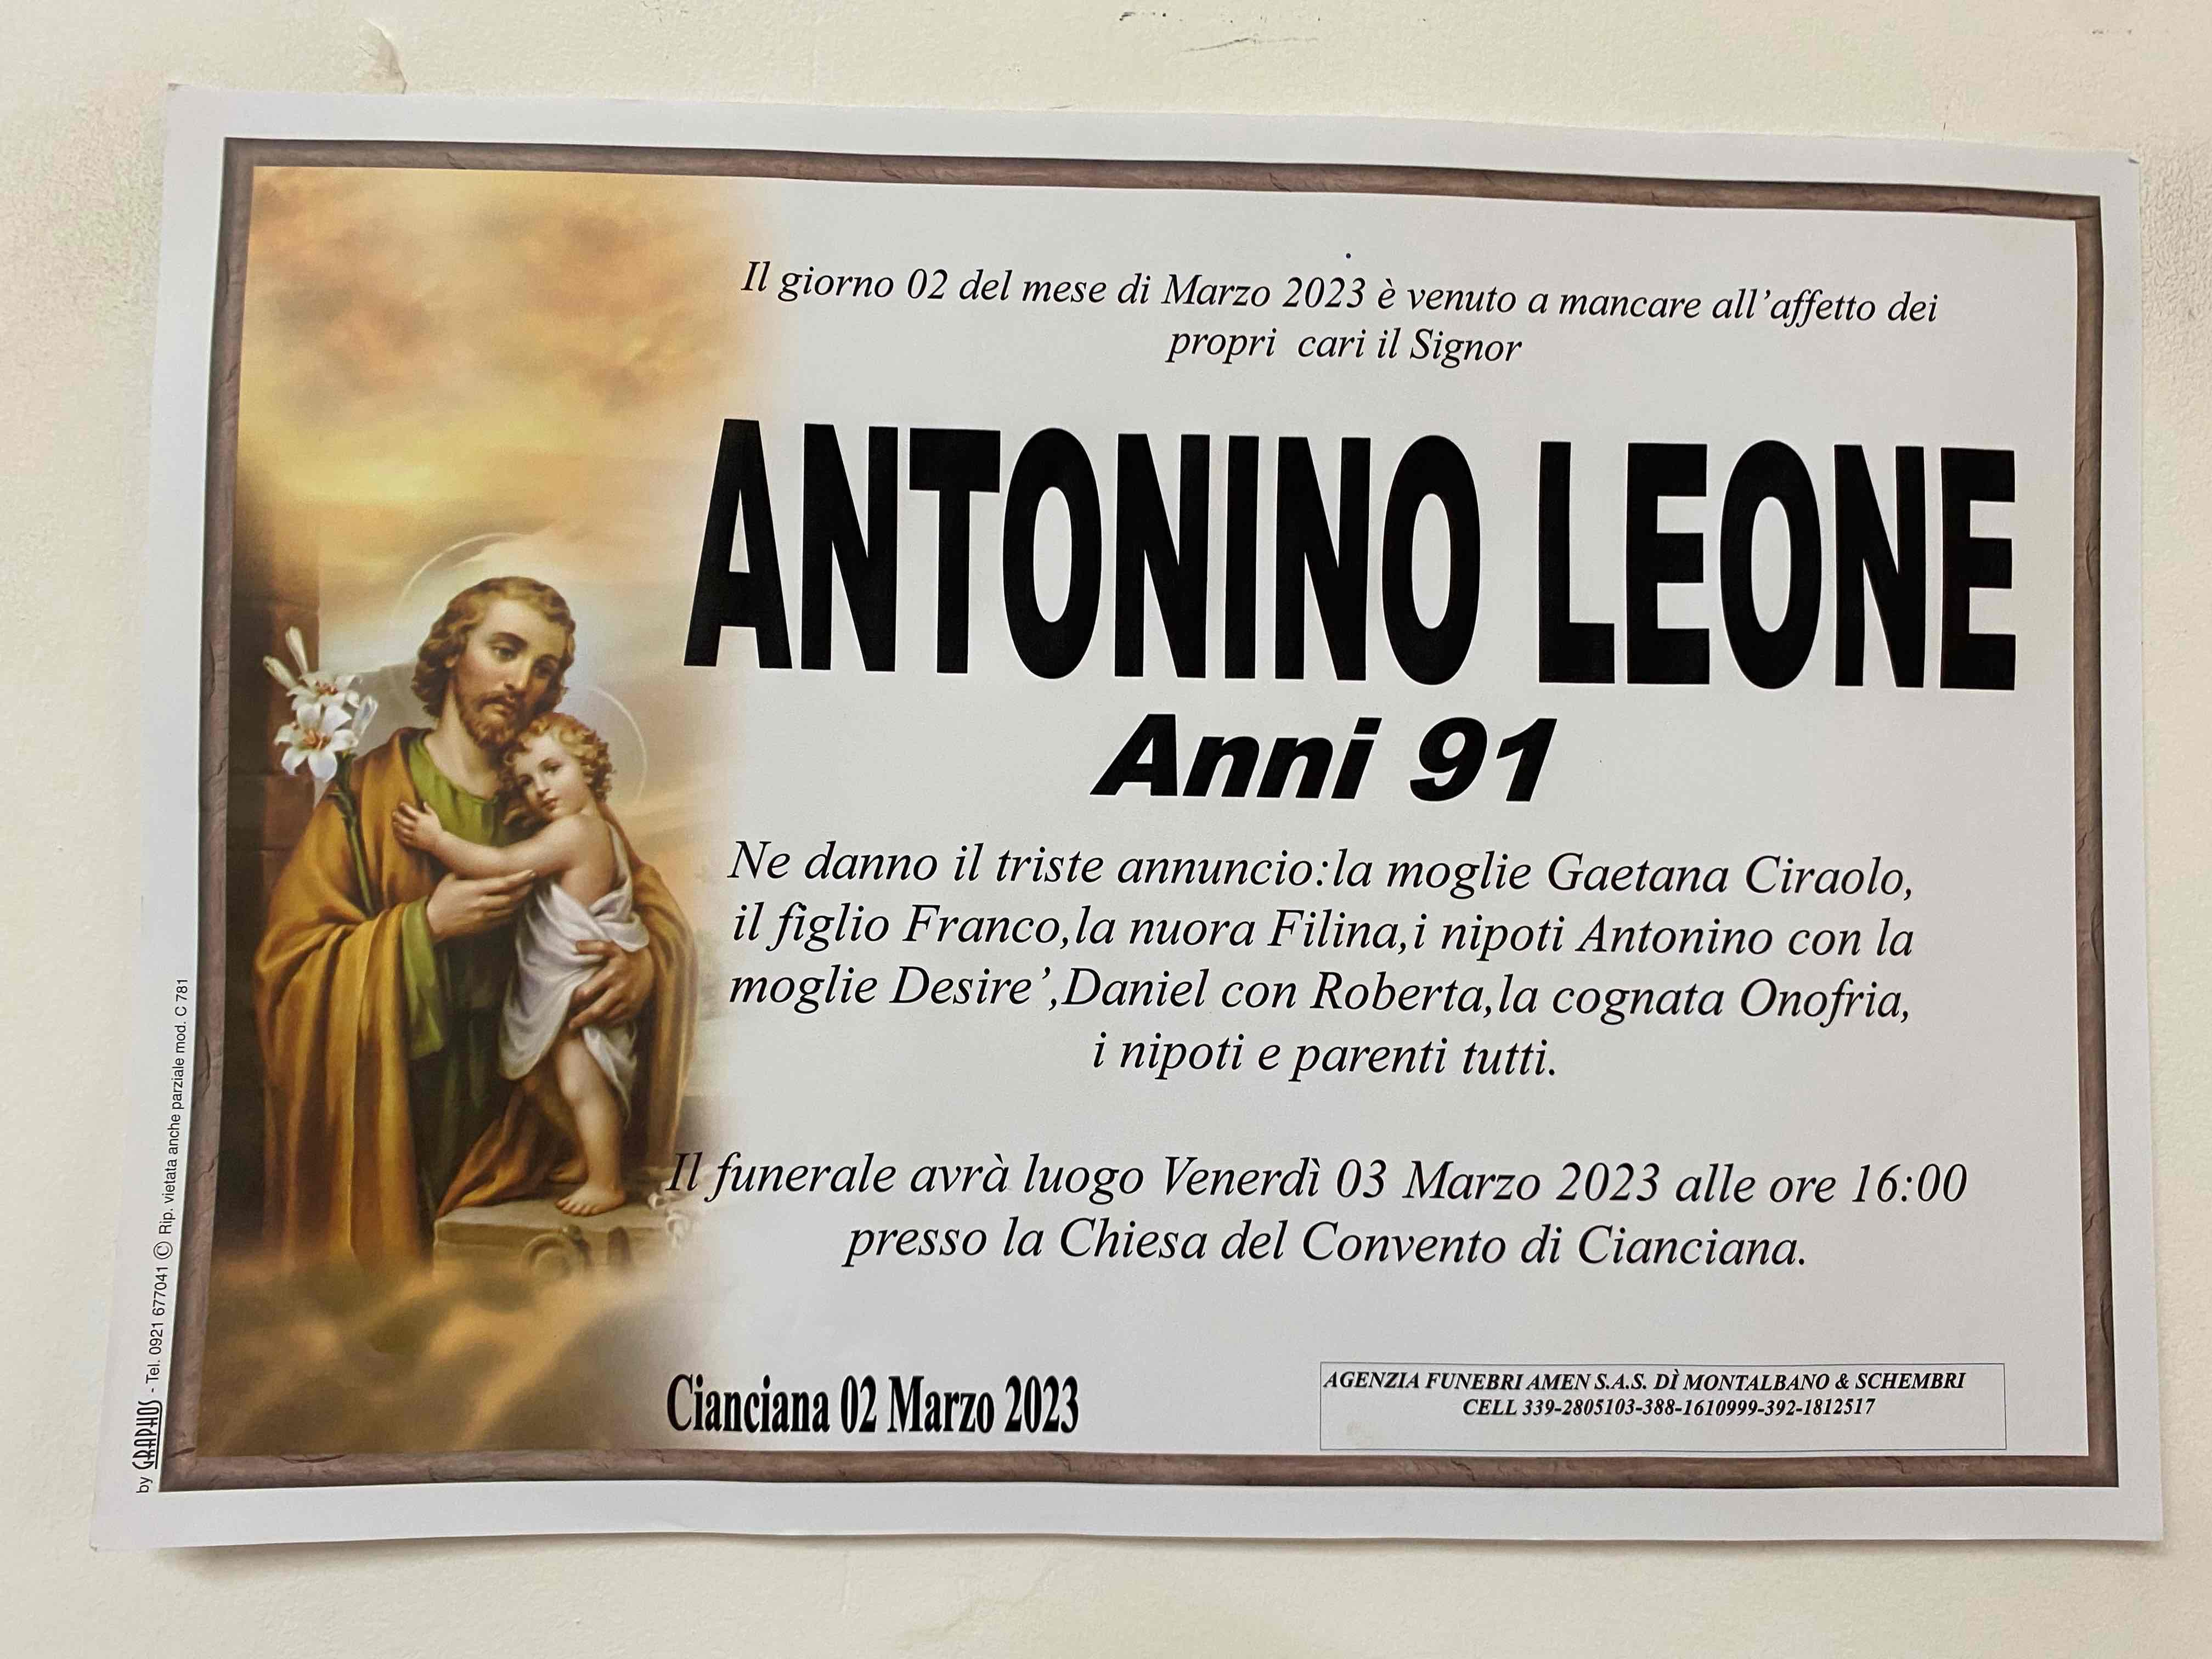 Antonino Leone